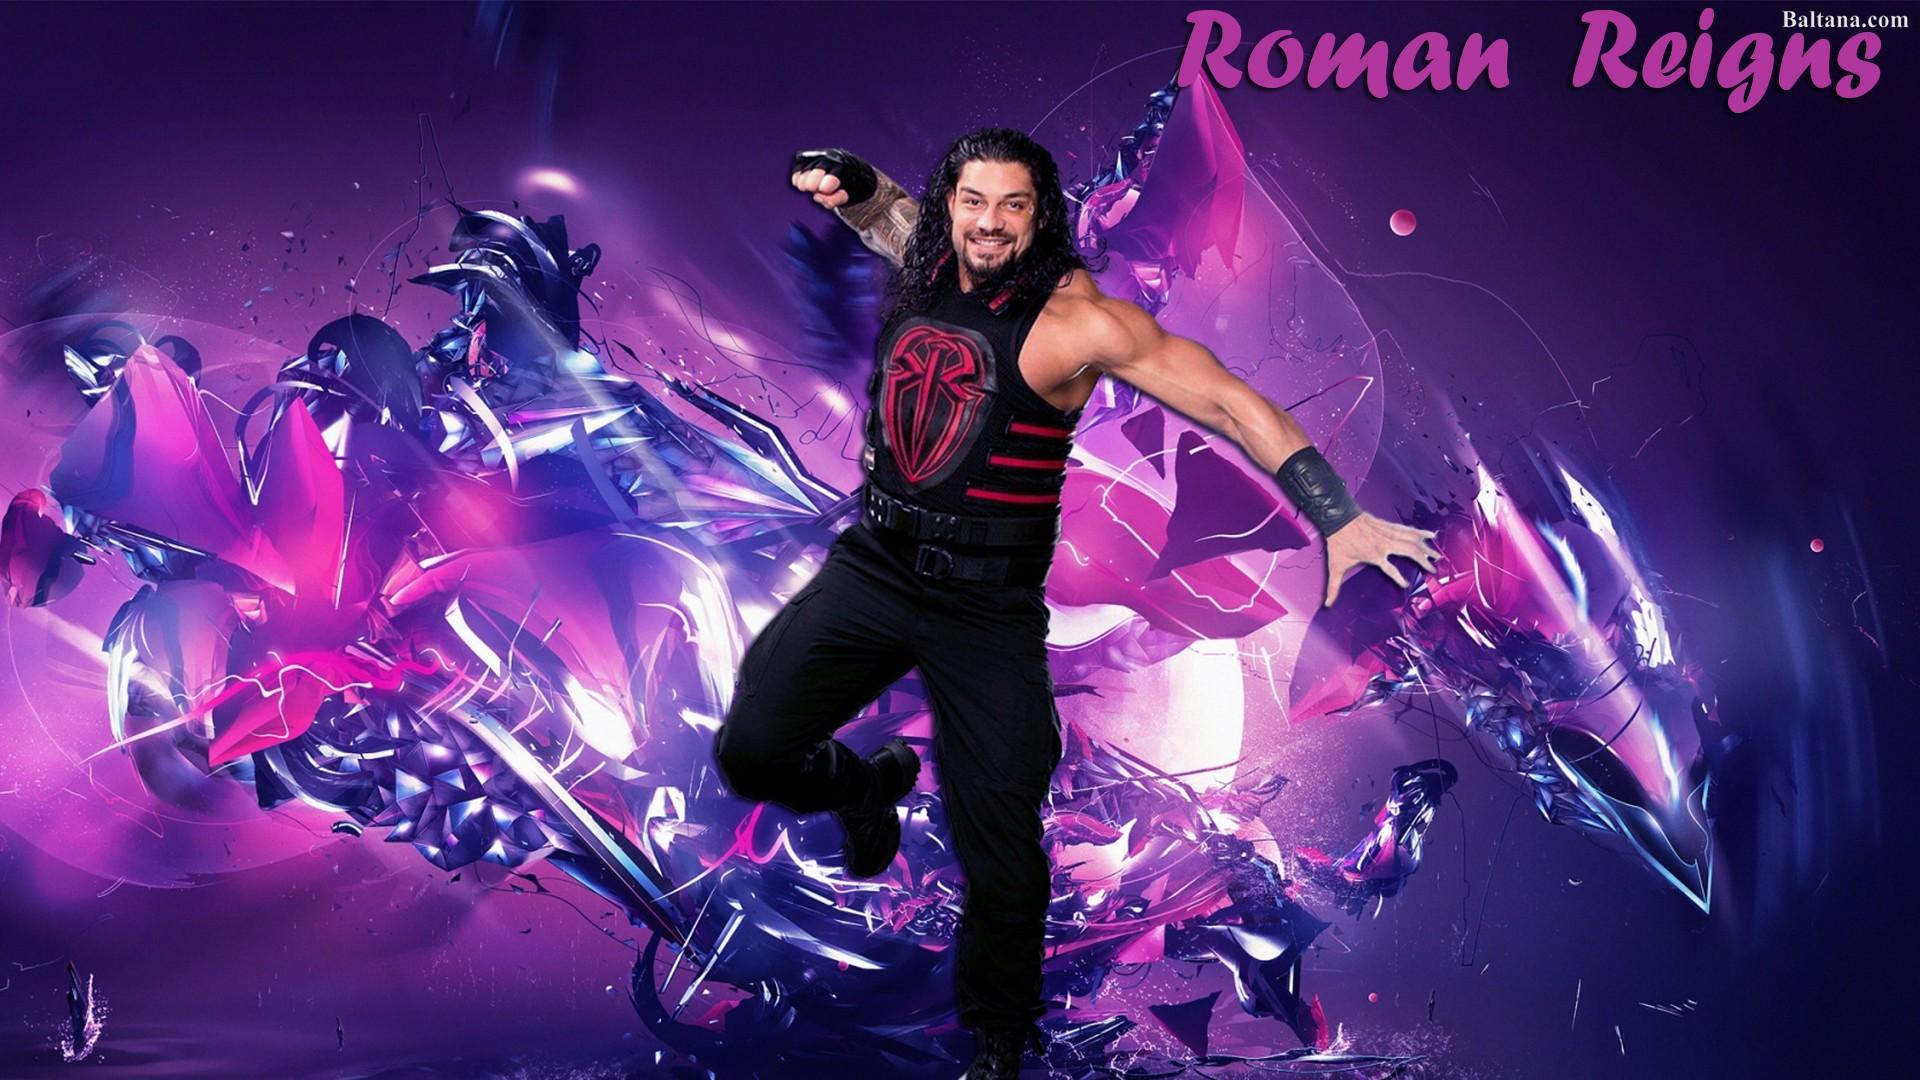 WWE Roman Reigns Wallpaper Download 55 New HD Image Gallery